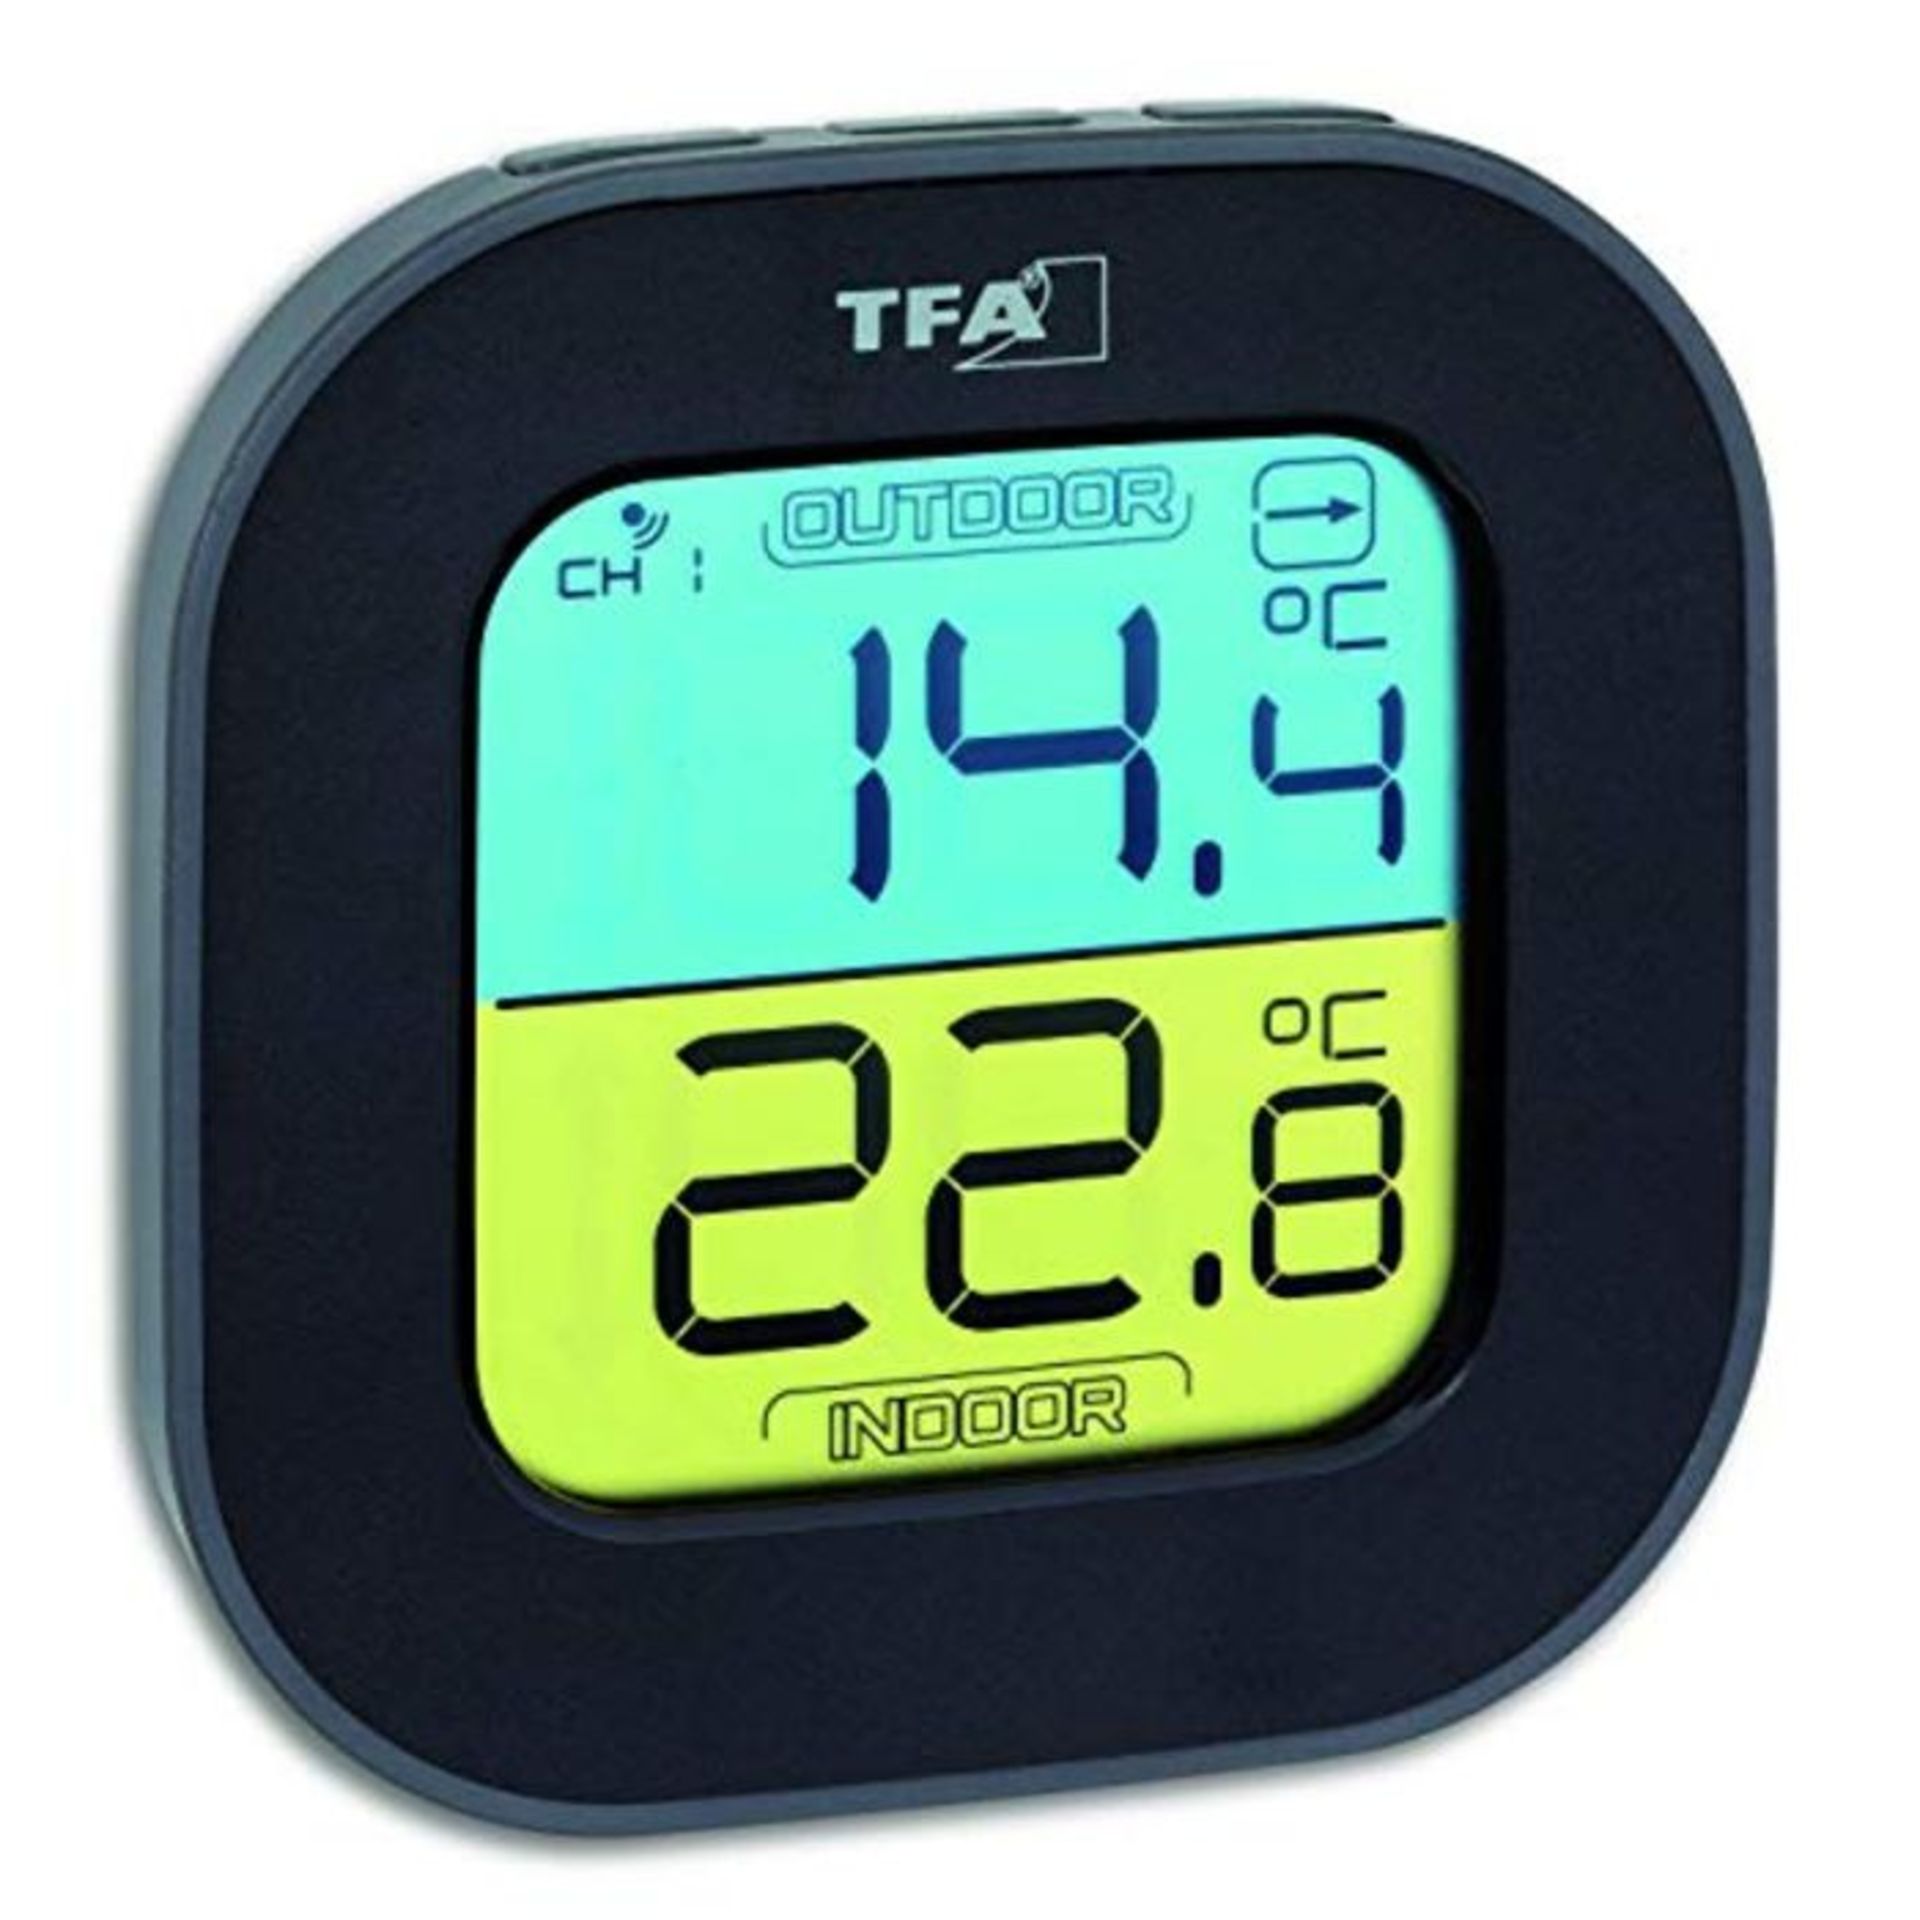 TFA Dostmann Fun Thermometer with Outdoor Sensor Wireless Indoor/Outdoor Digital Trend